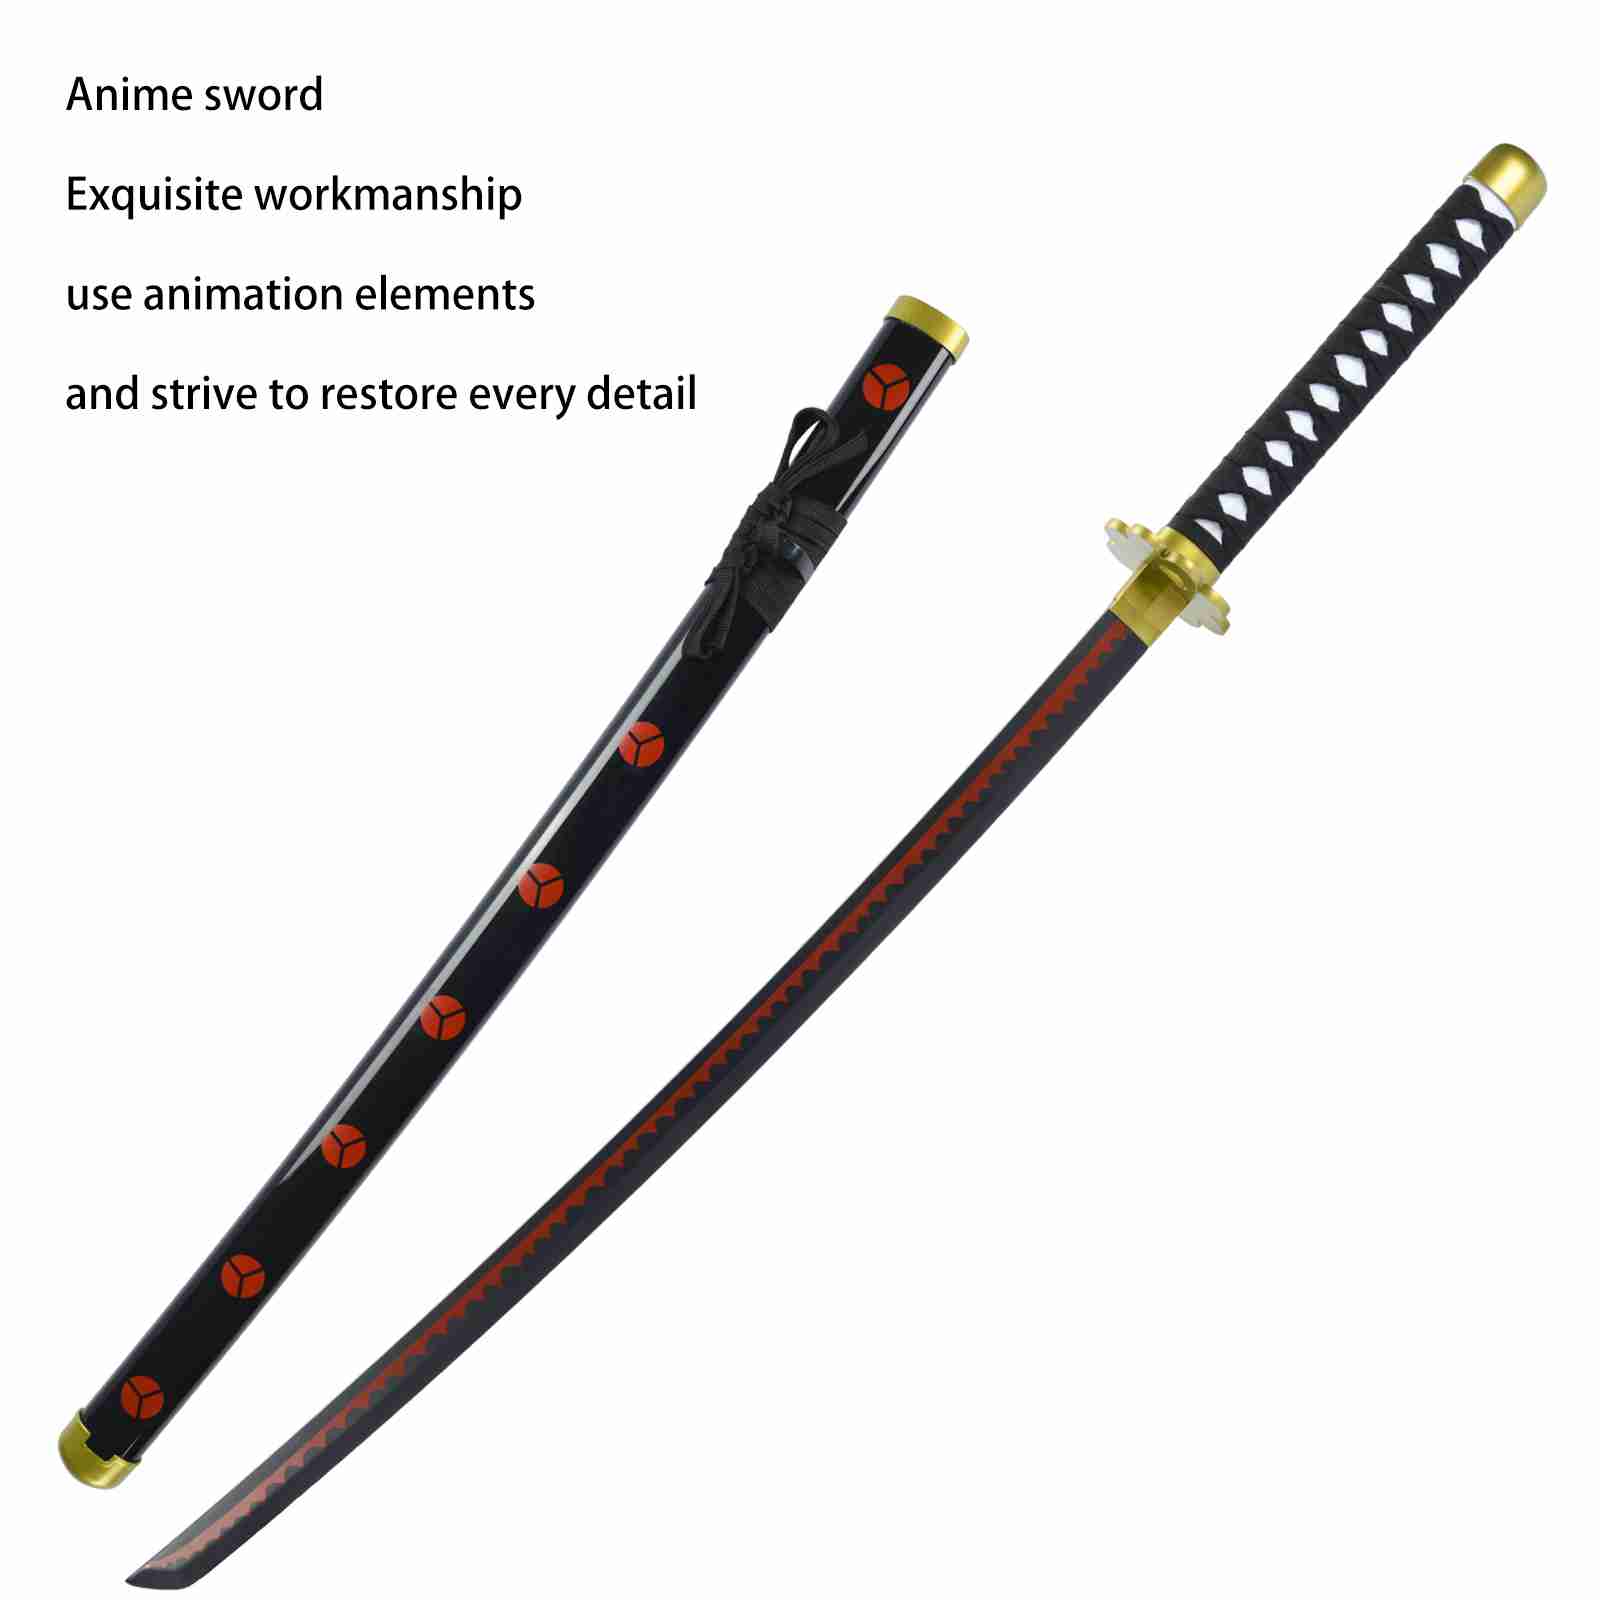 zoro-anime-sword for cheap